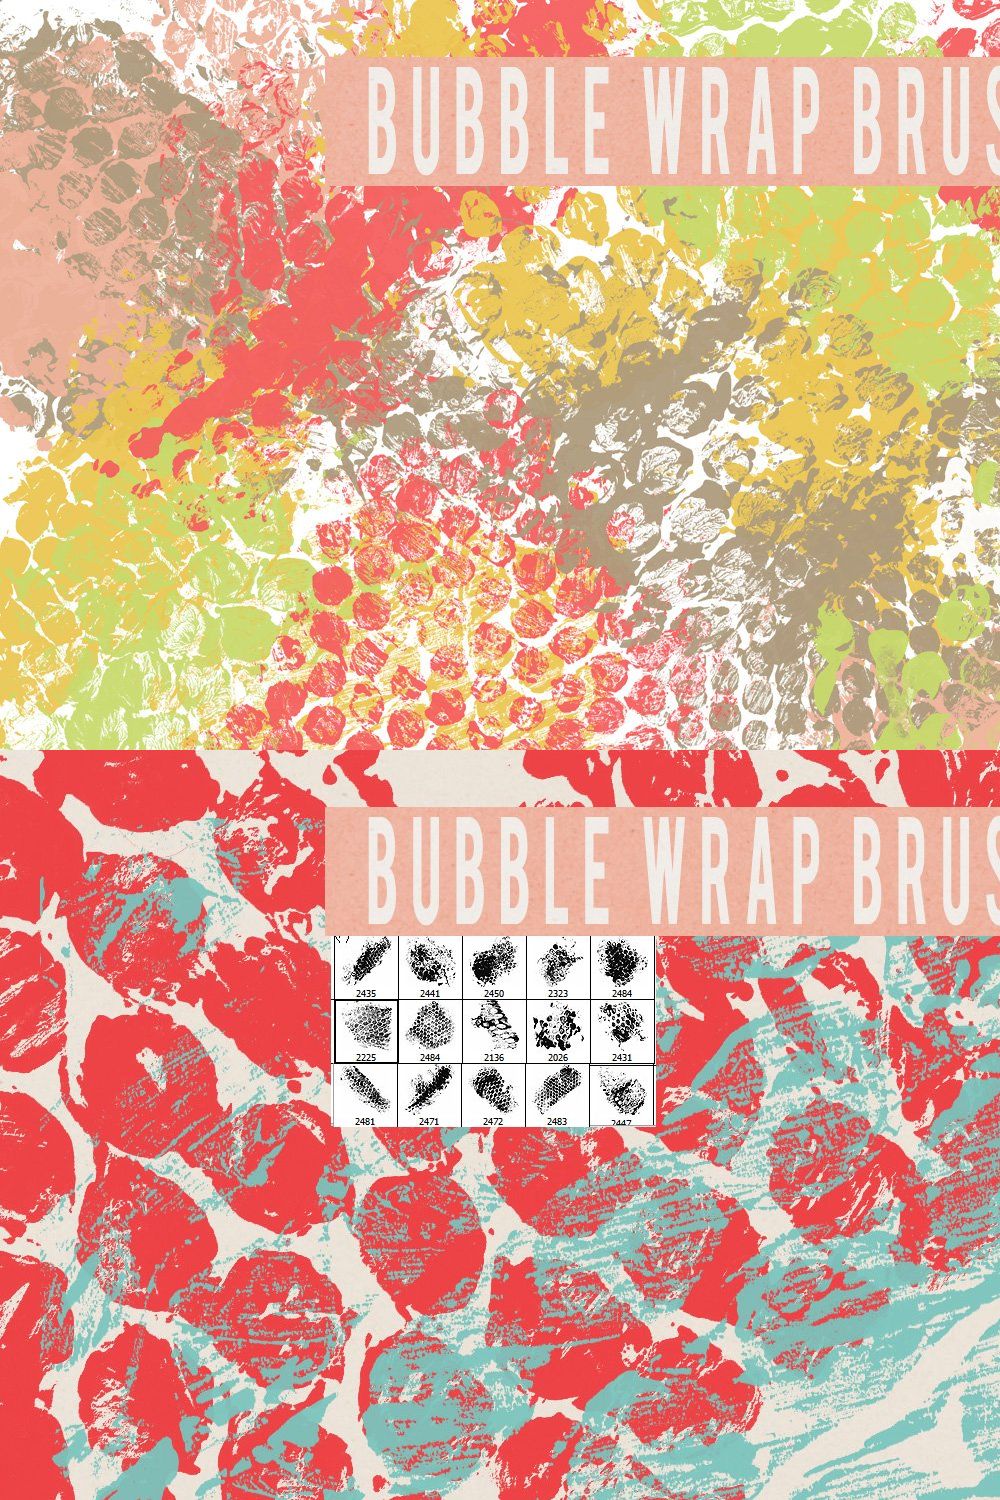 Bubble Wrap Brushes pinterest preview image.